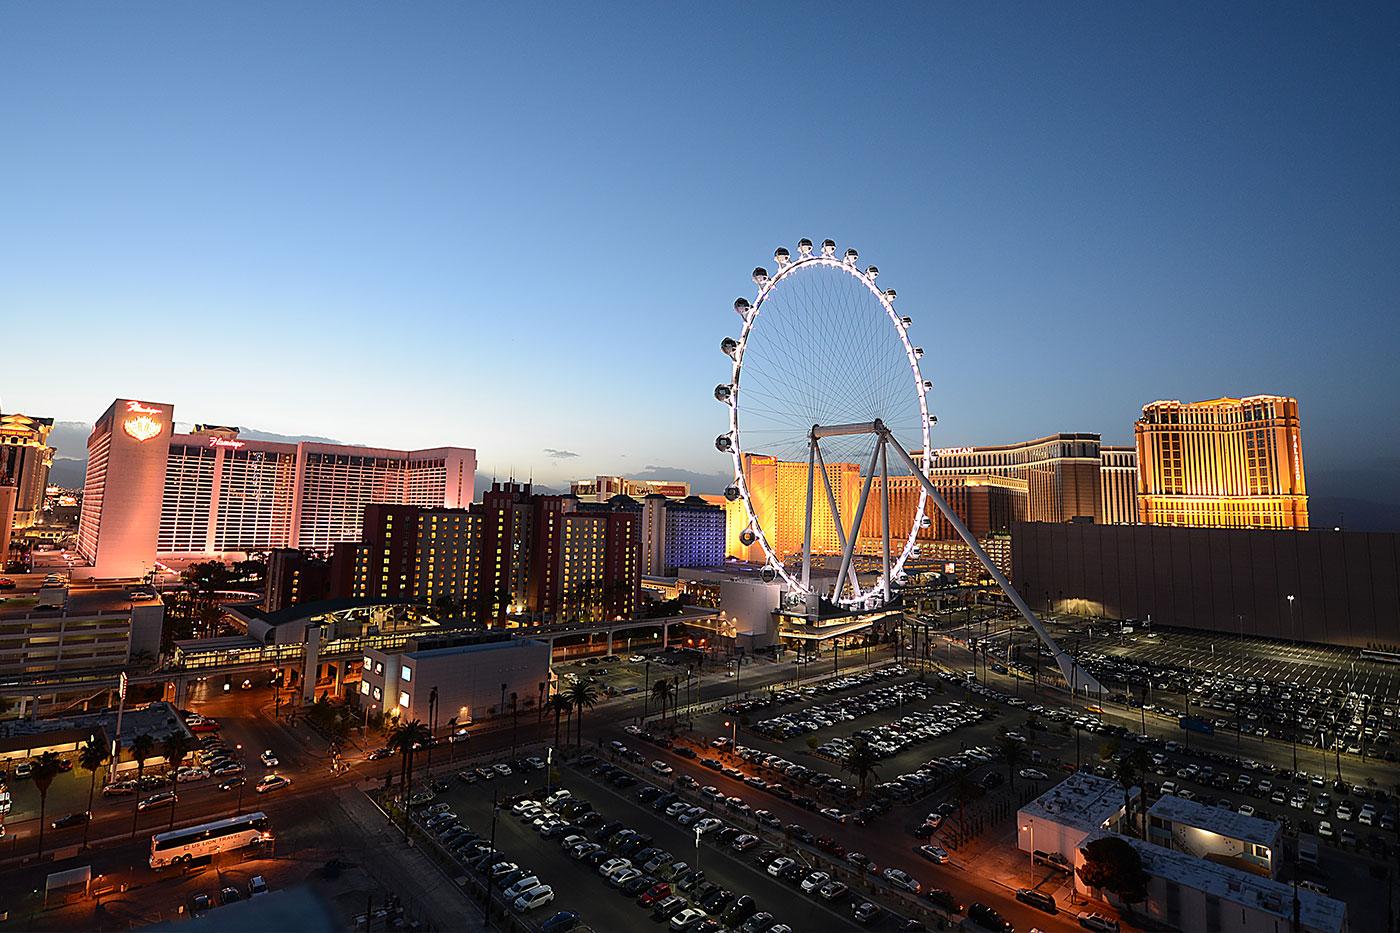 High Roller Observation Wheel: Las Vegas, Nevada